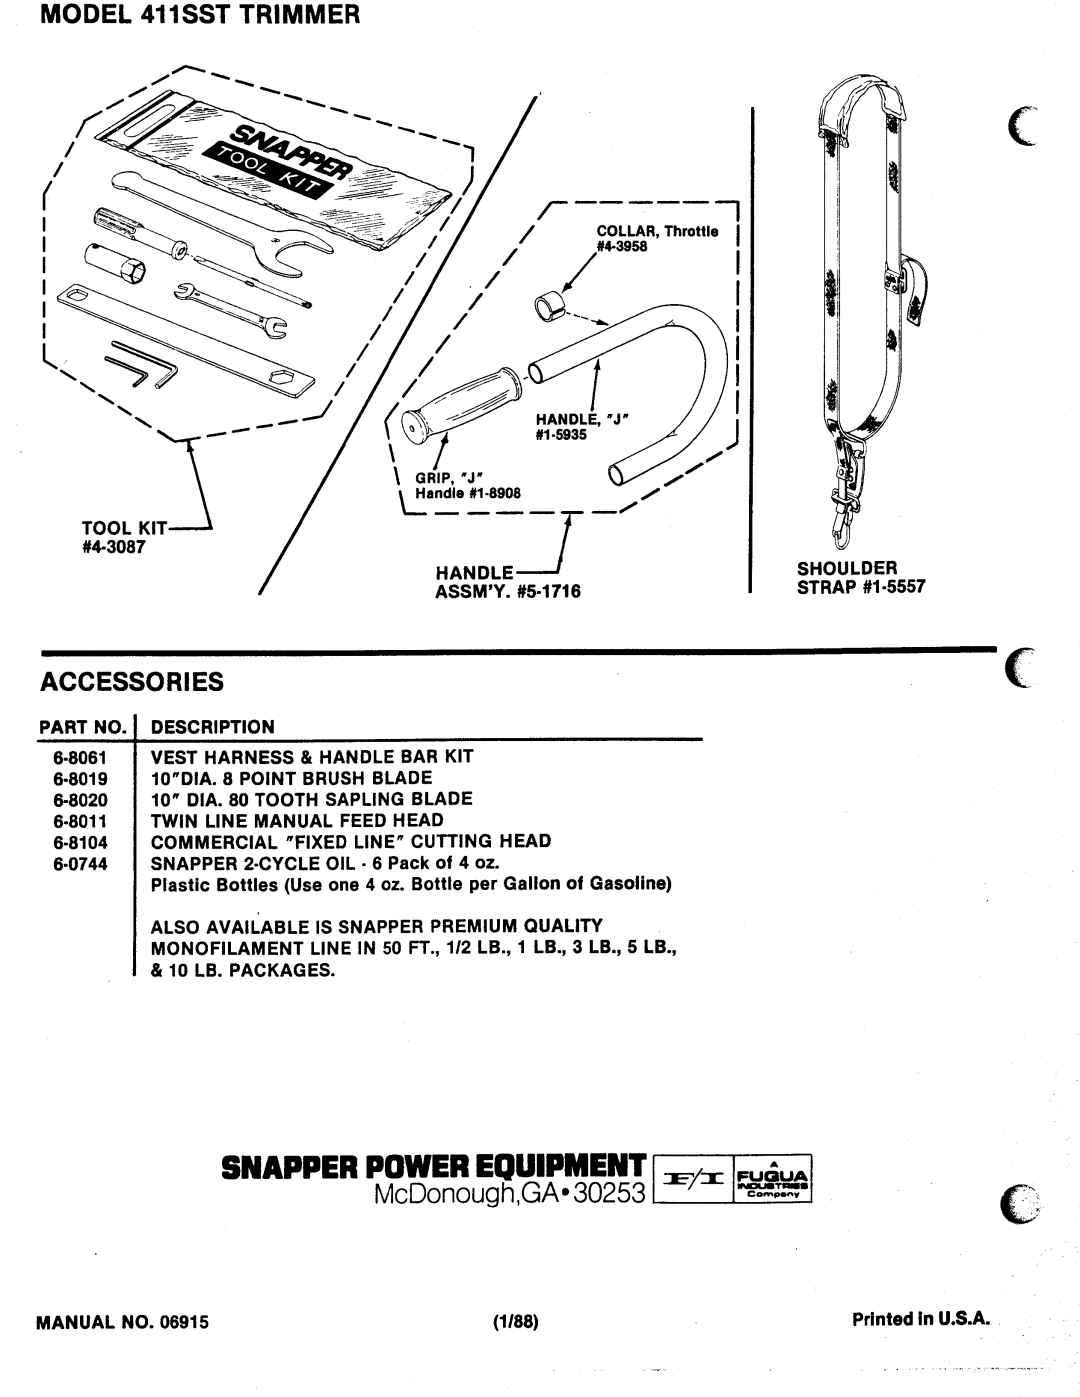 Snapper 411SST manual 